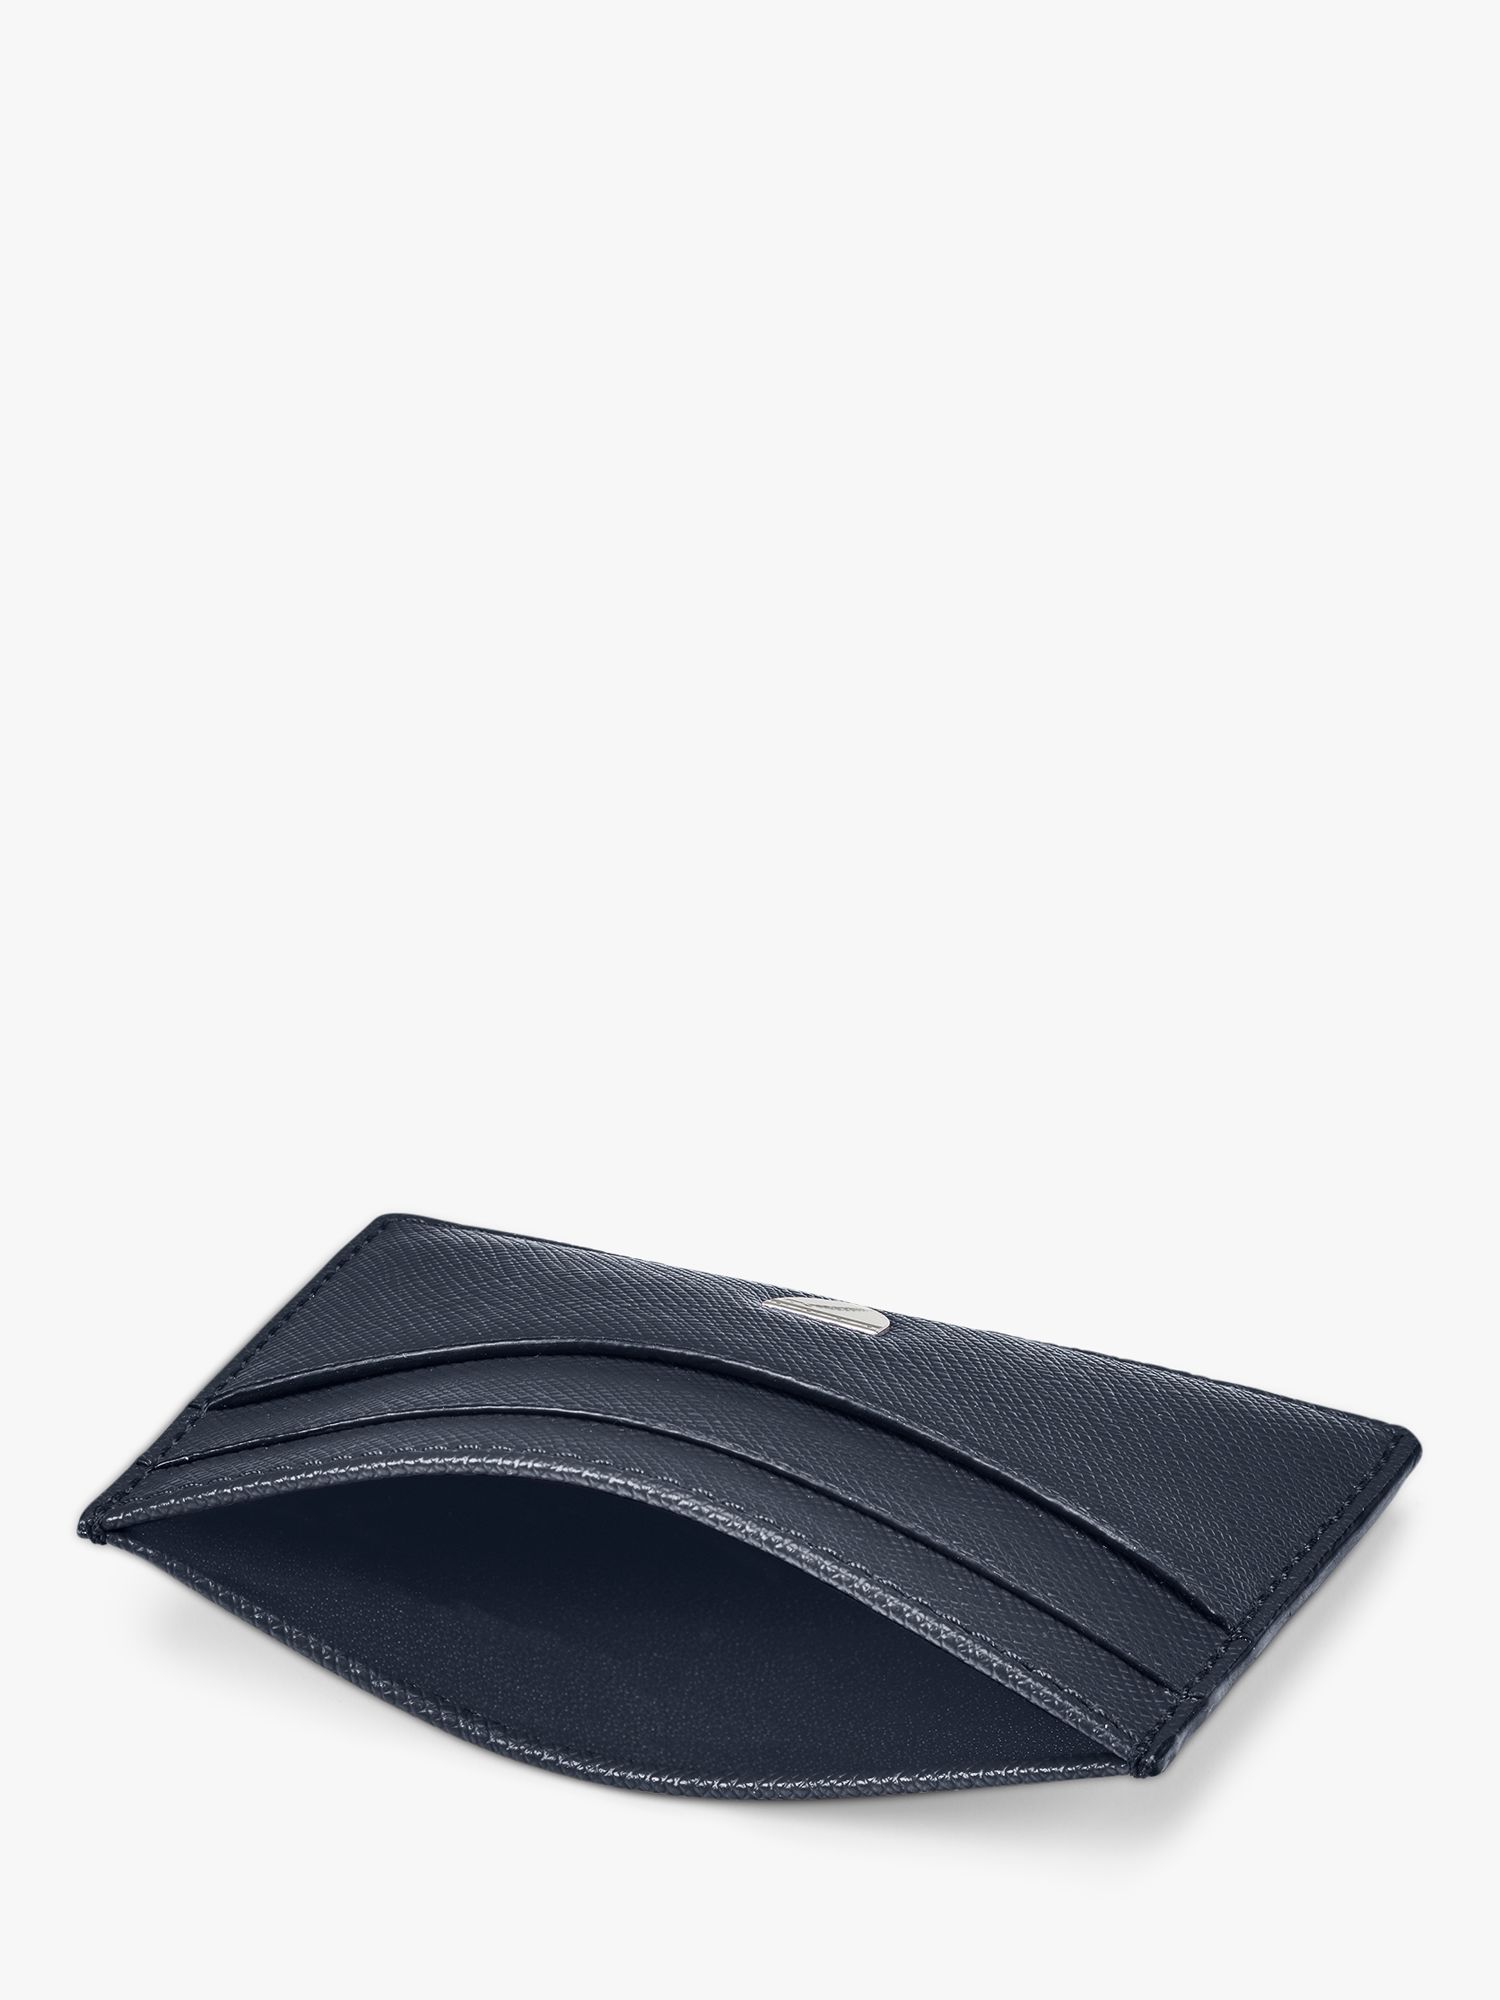 Buy Aspinal of London Saffiano Leather Slim Credit Card Holder Online at johnlewis.com